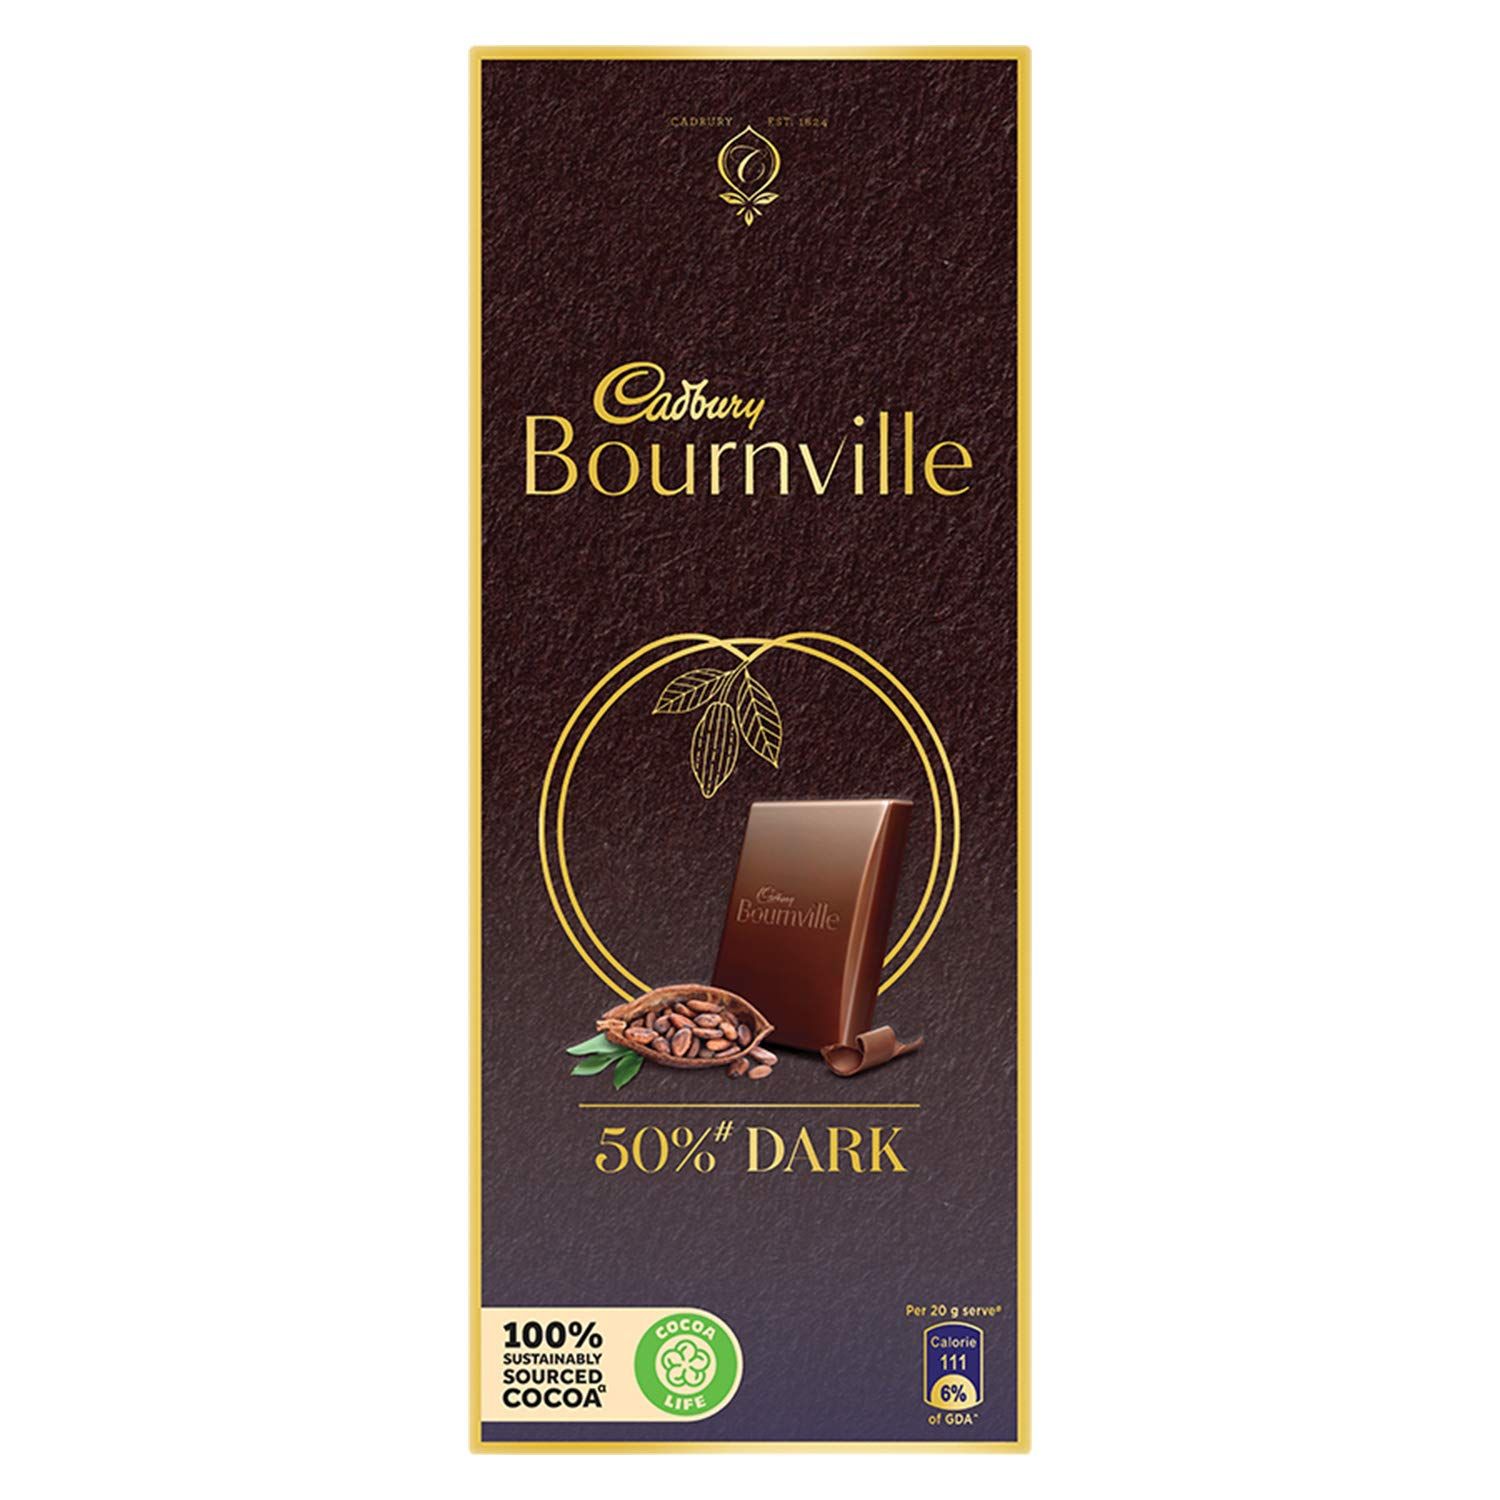 Cadbury Bournville Rich Cocoa Dark Chocolate Bar Image